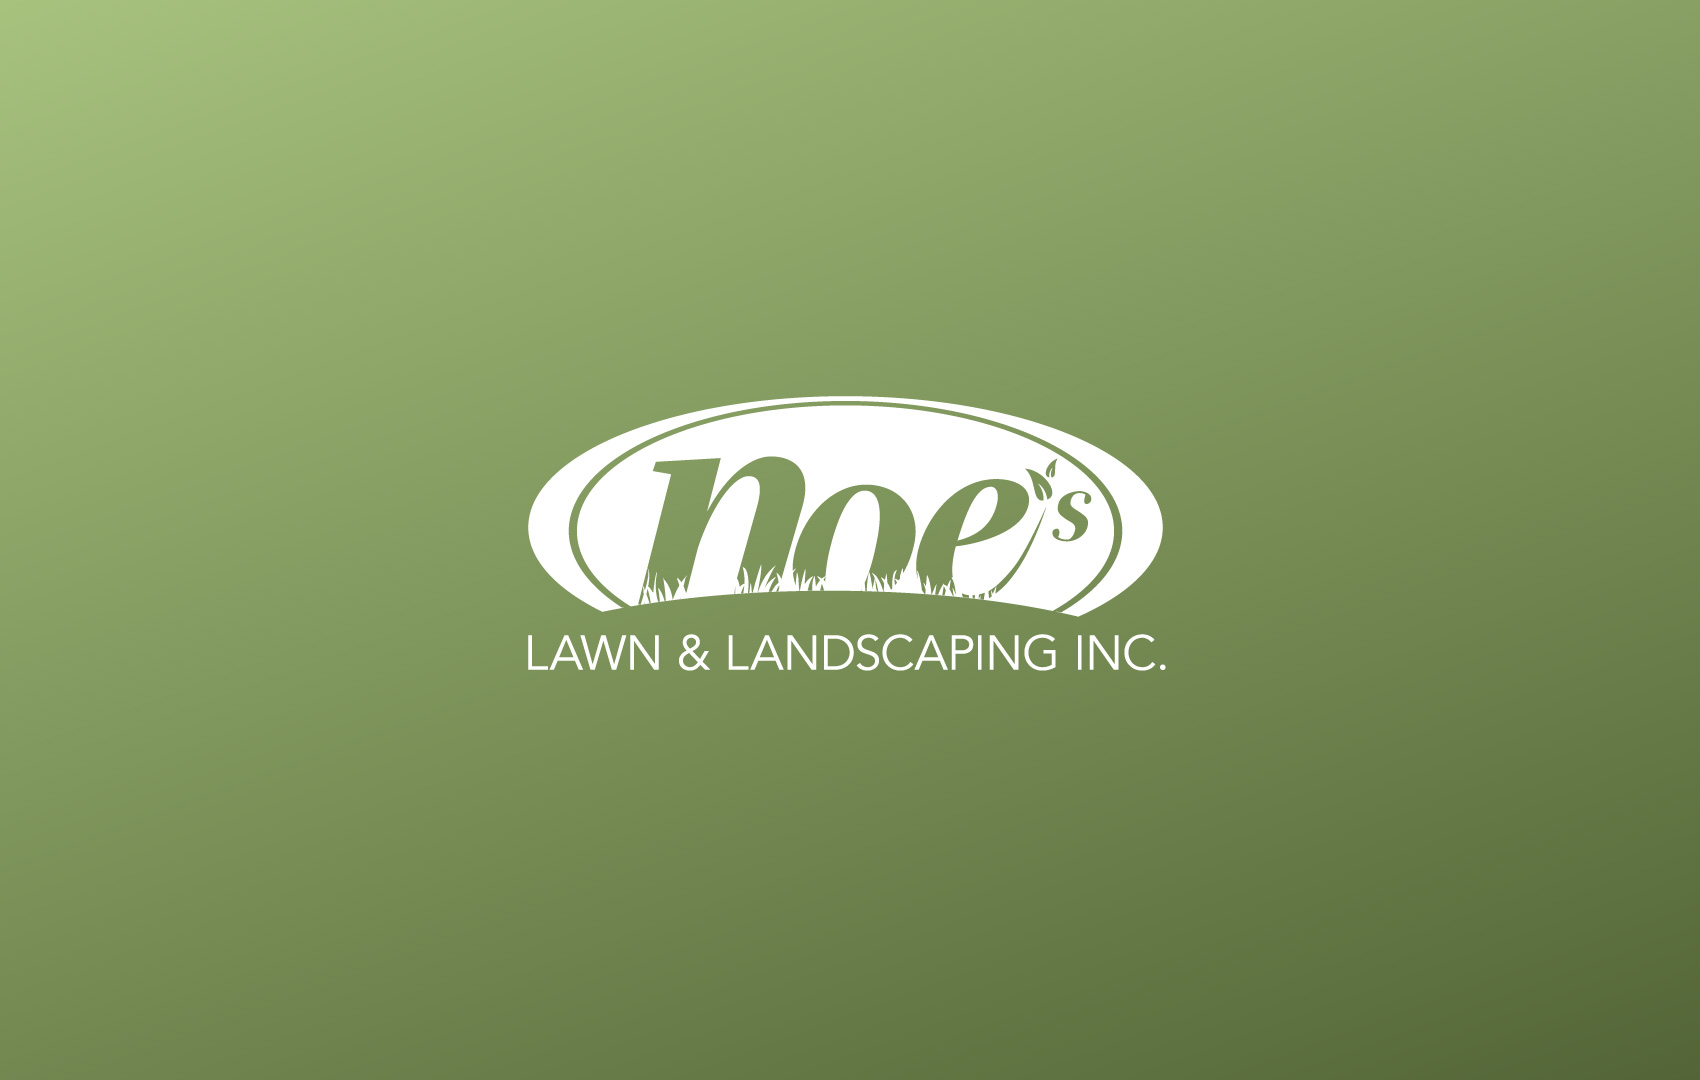 Logotype design |Noe's Lawn & Landscaping